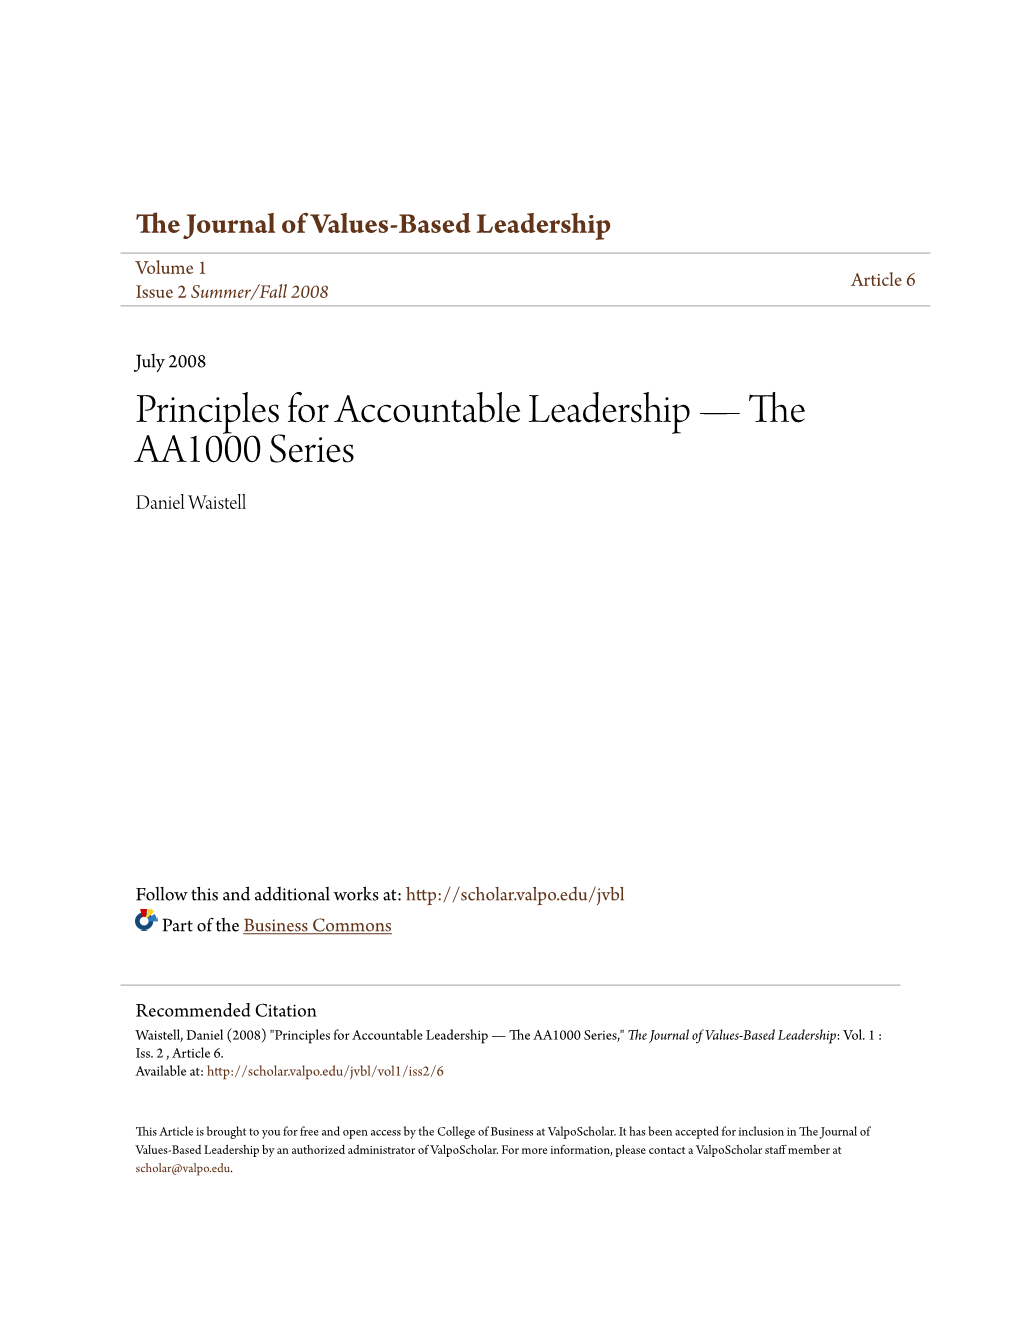 Principles for Accountable Leadership — the AA1000 Series Daniel Waistell